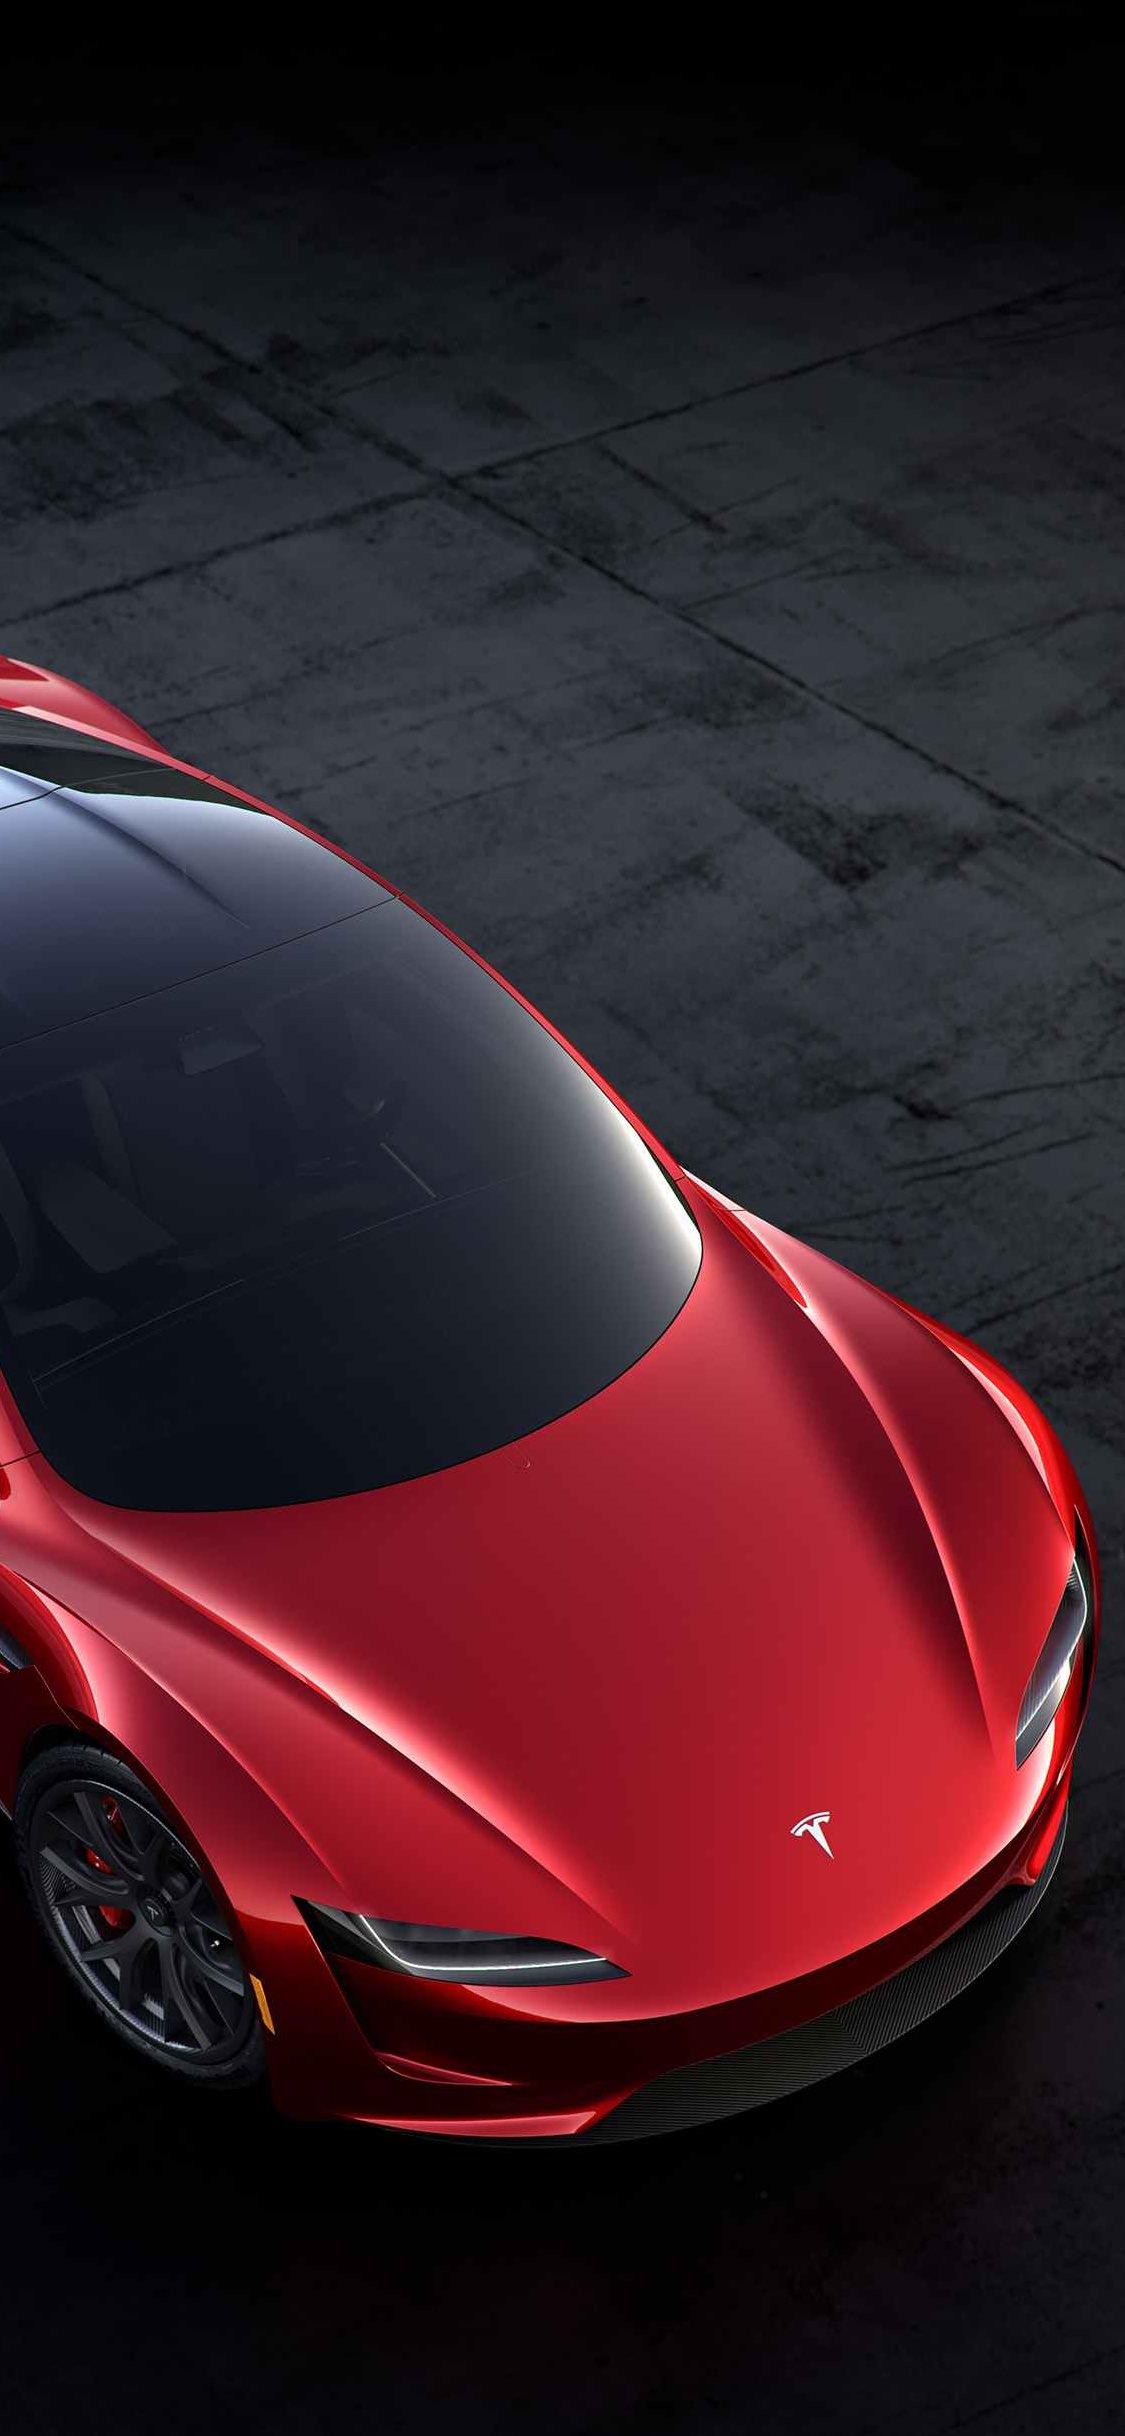 Tesla Roadster 2020 Wallpaper For iPhone X, iPad And Mac